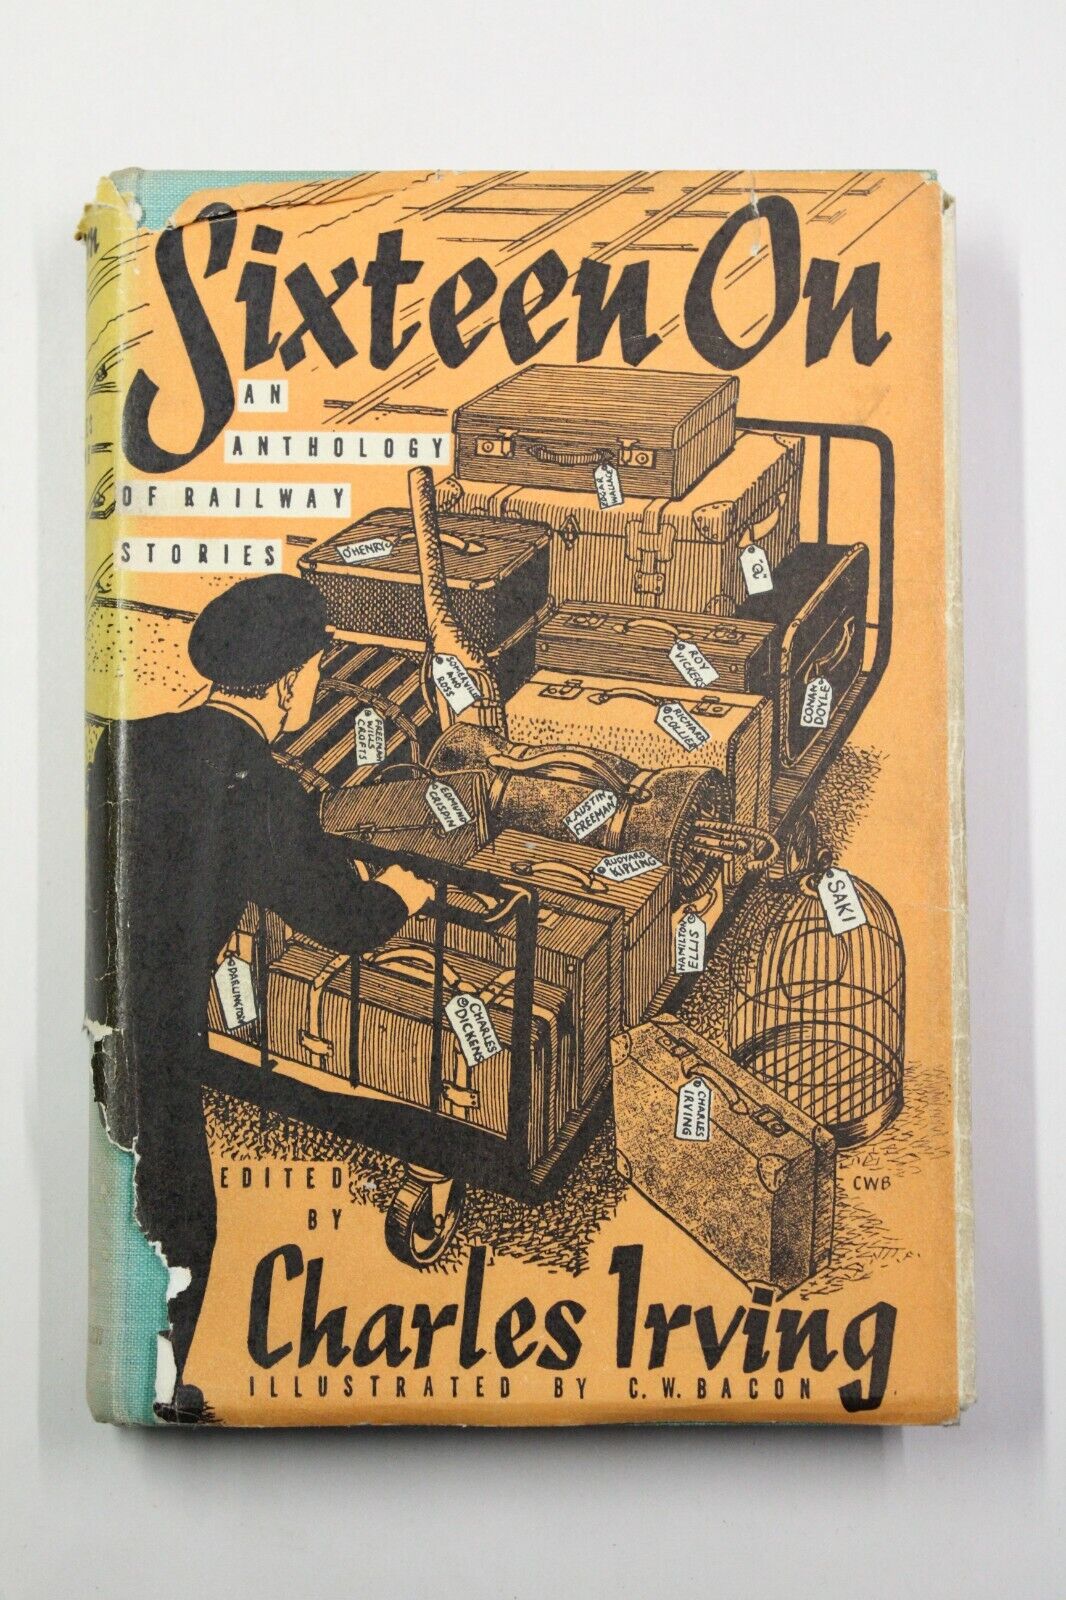 SIXTEEN ON An Anthology Of Railway Stories Charles Irving 1957 RARE Hardback E